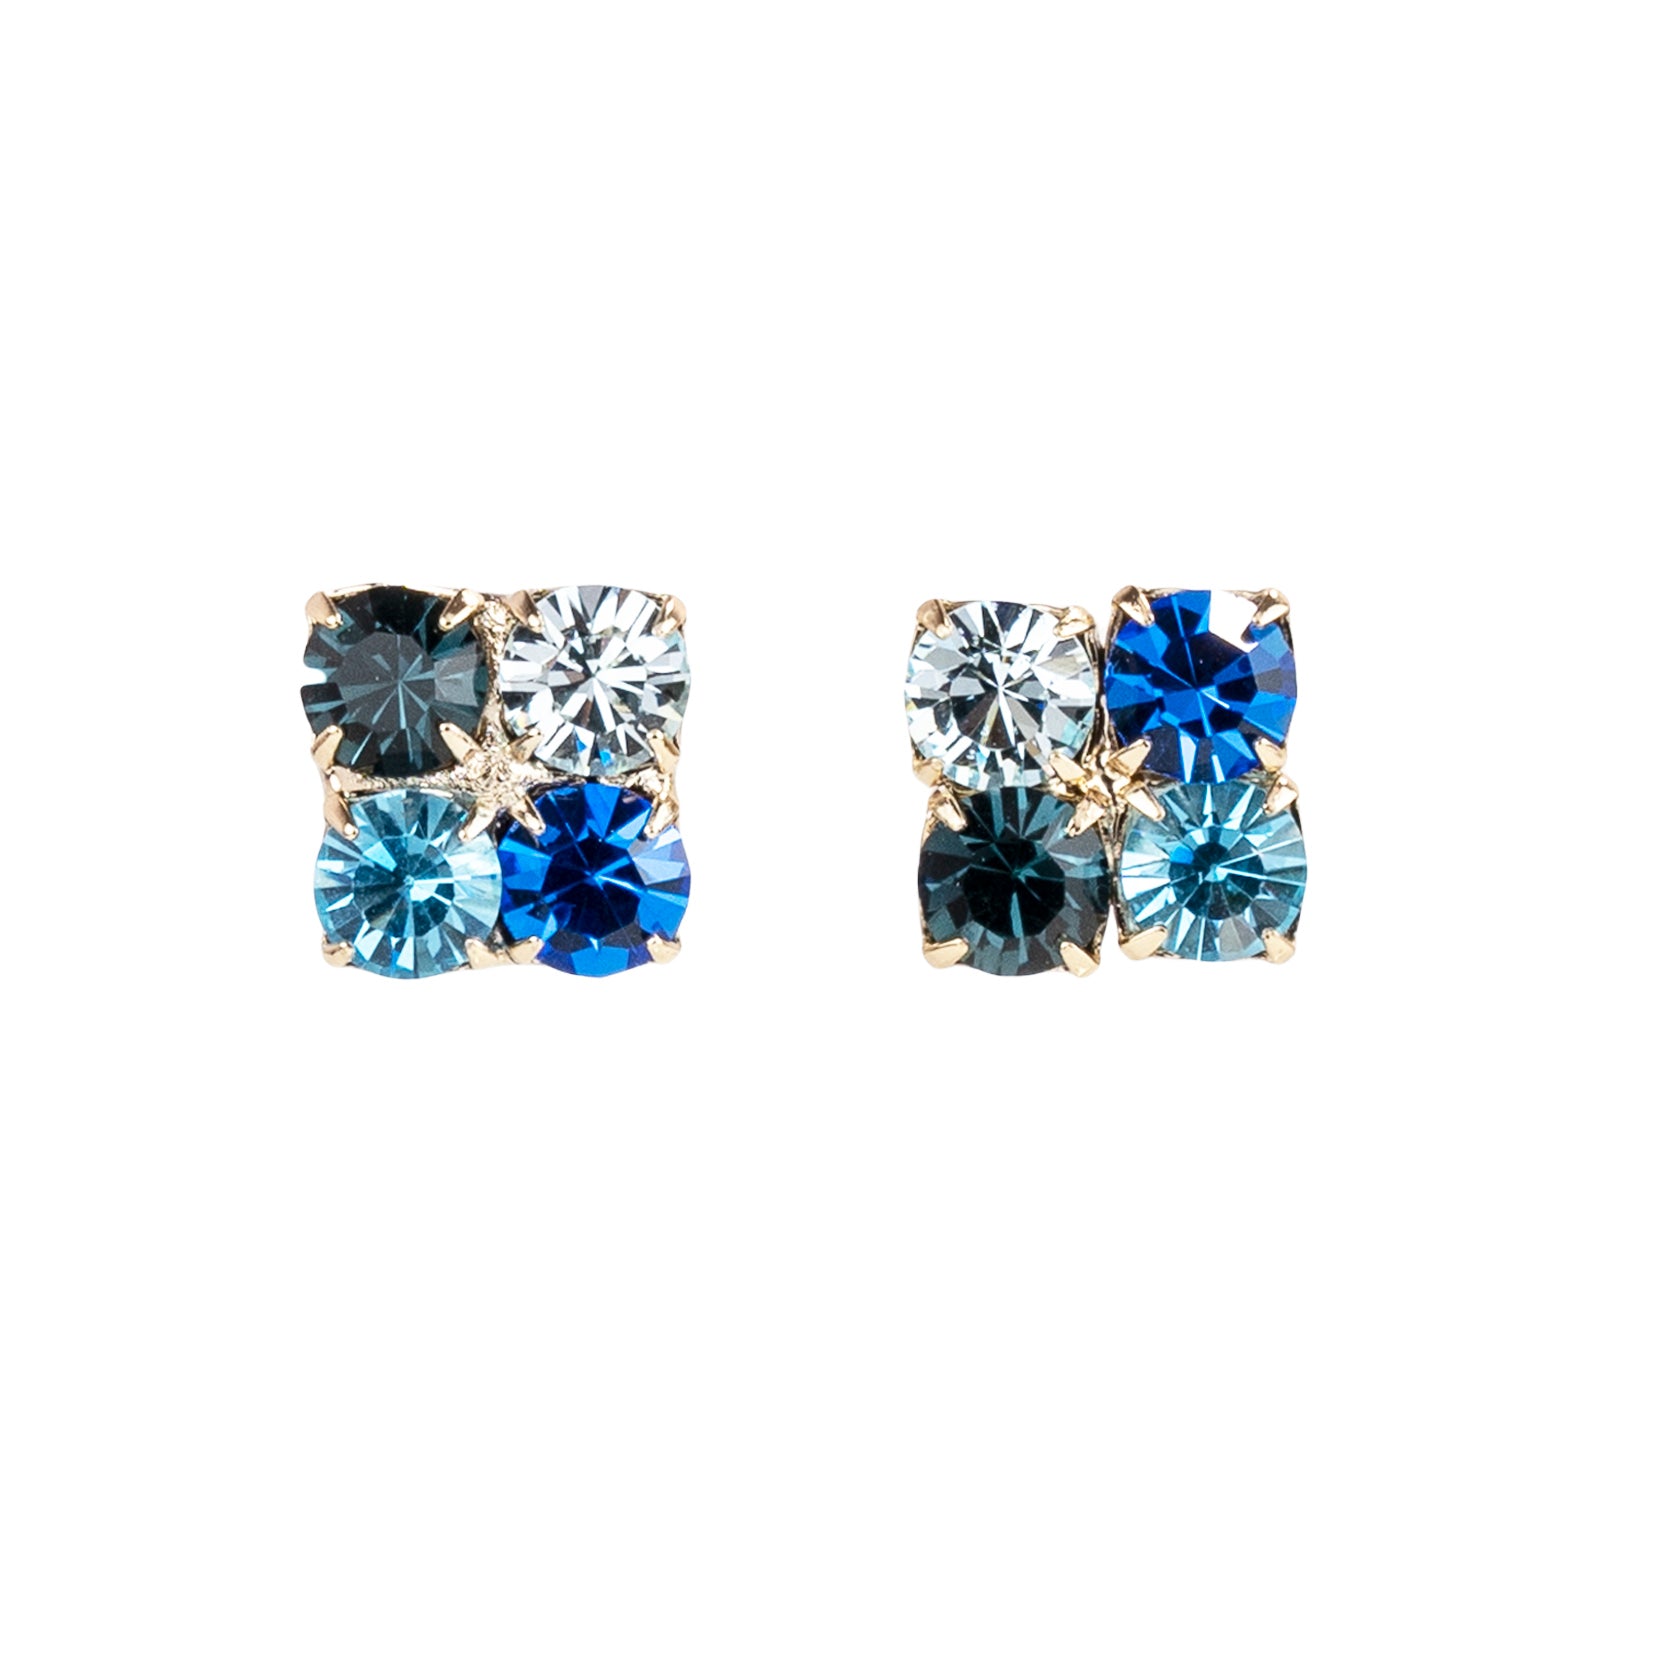 Square crystal earrings